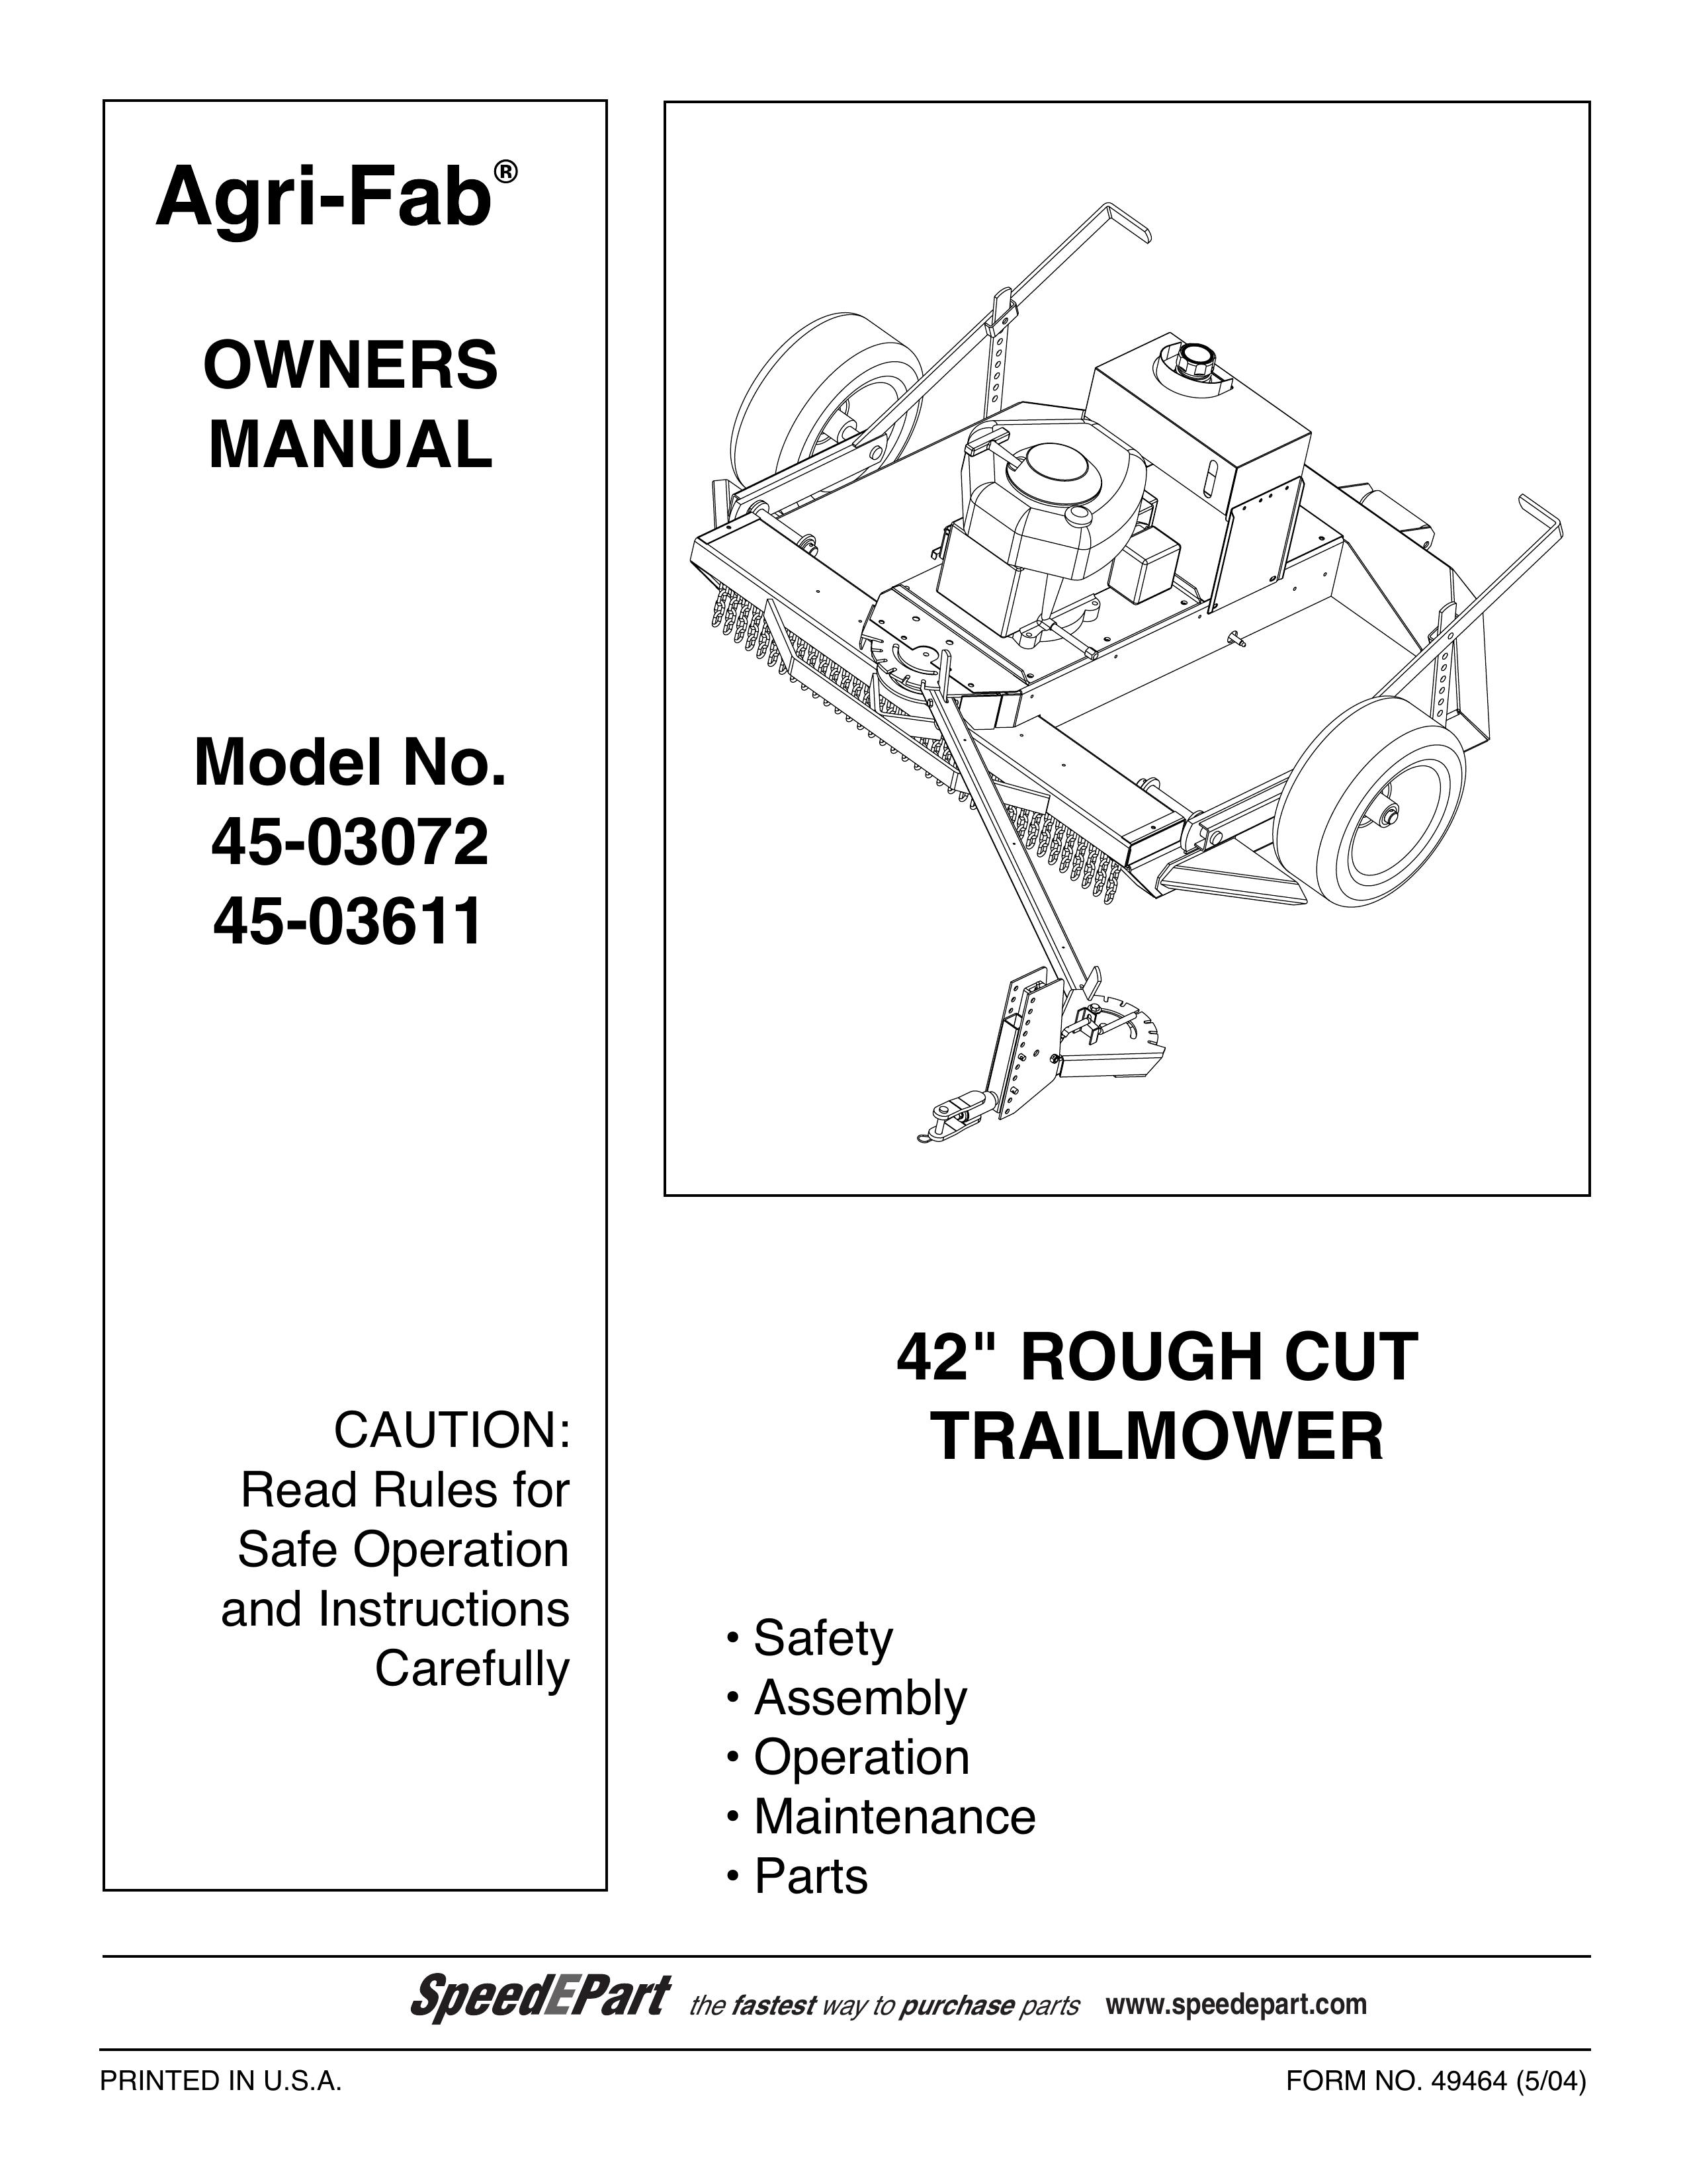 Agri-Fab 45-03611 Lawn Mower User Manual